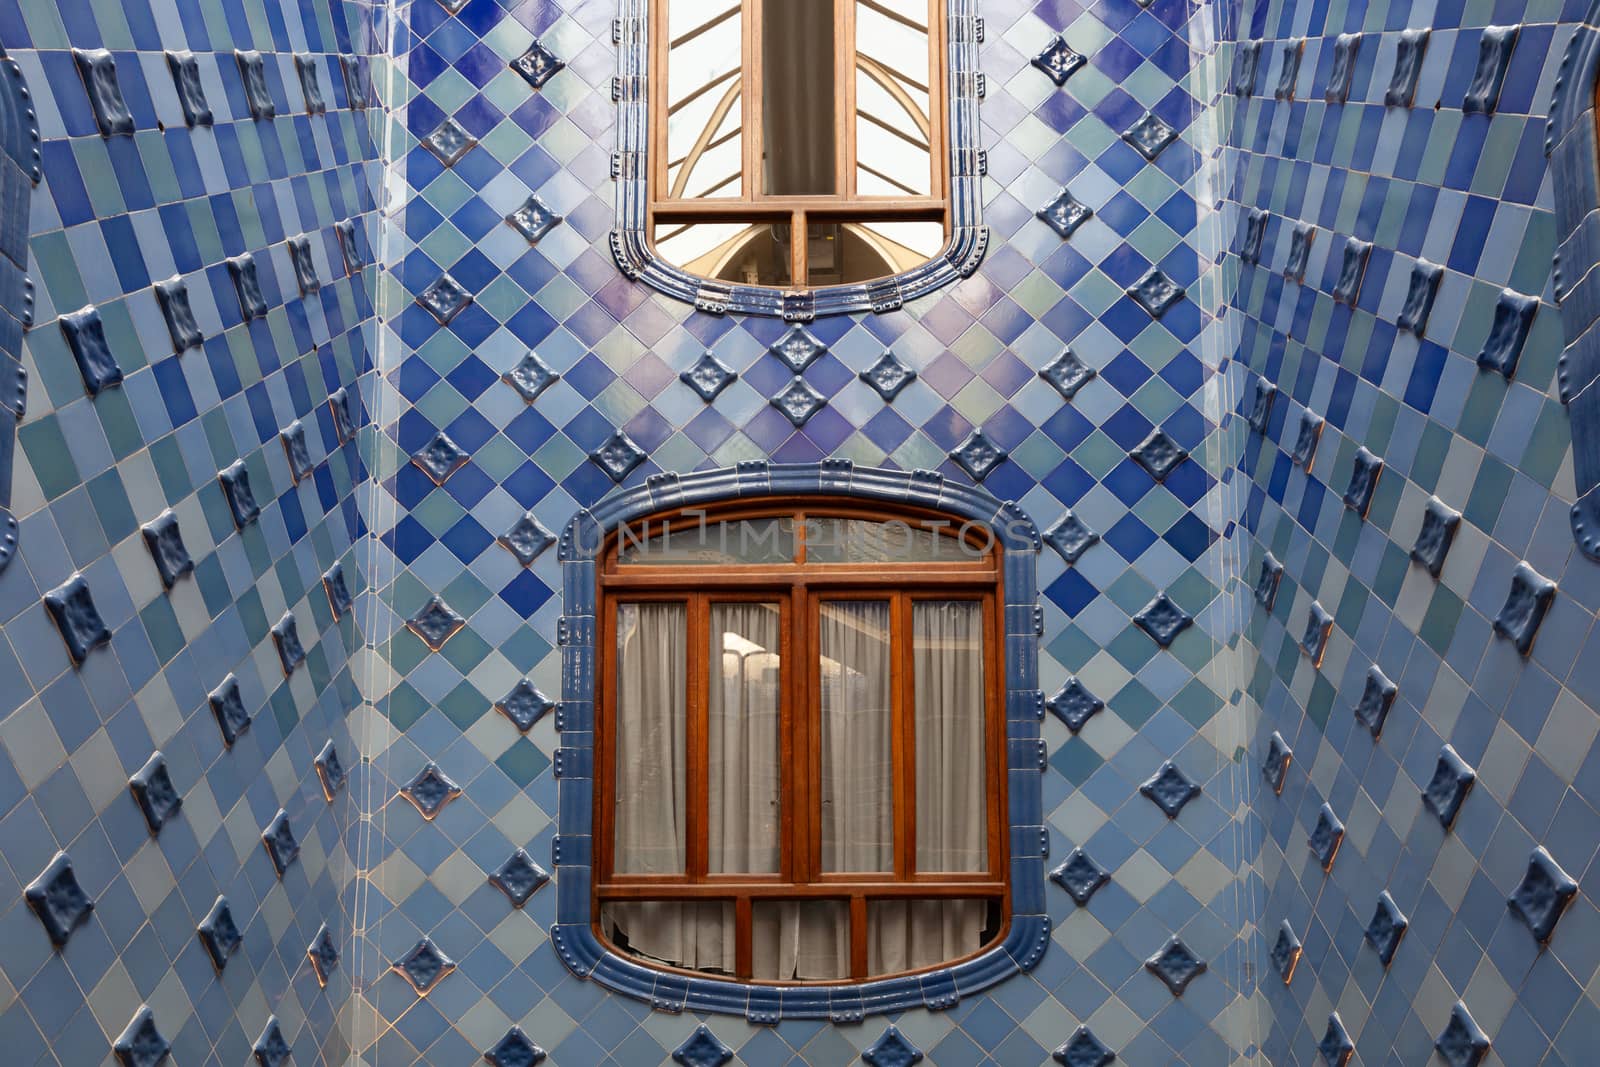 Casa Batllo atrium with inner windows, Barcelona, Spain by vlad-m